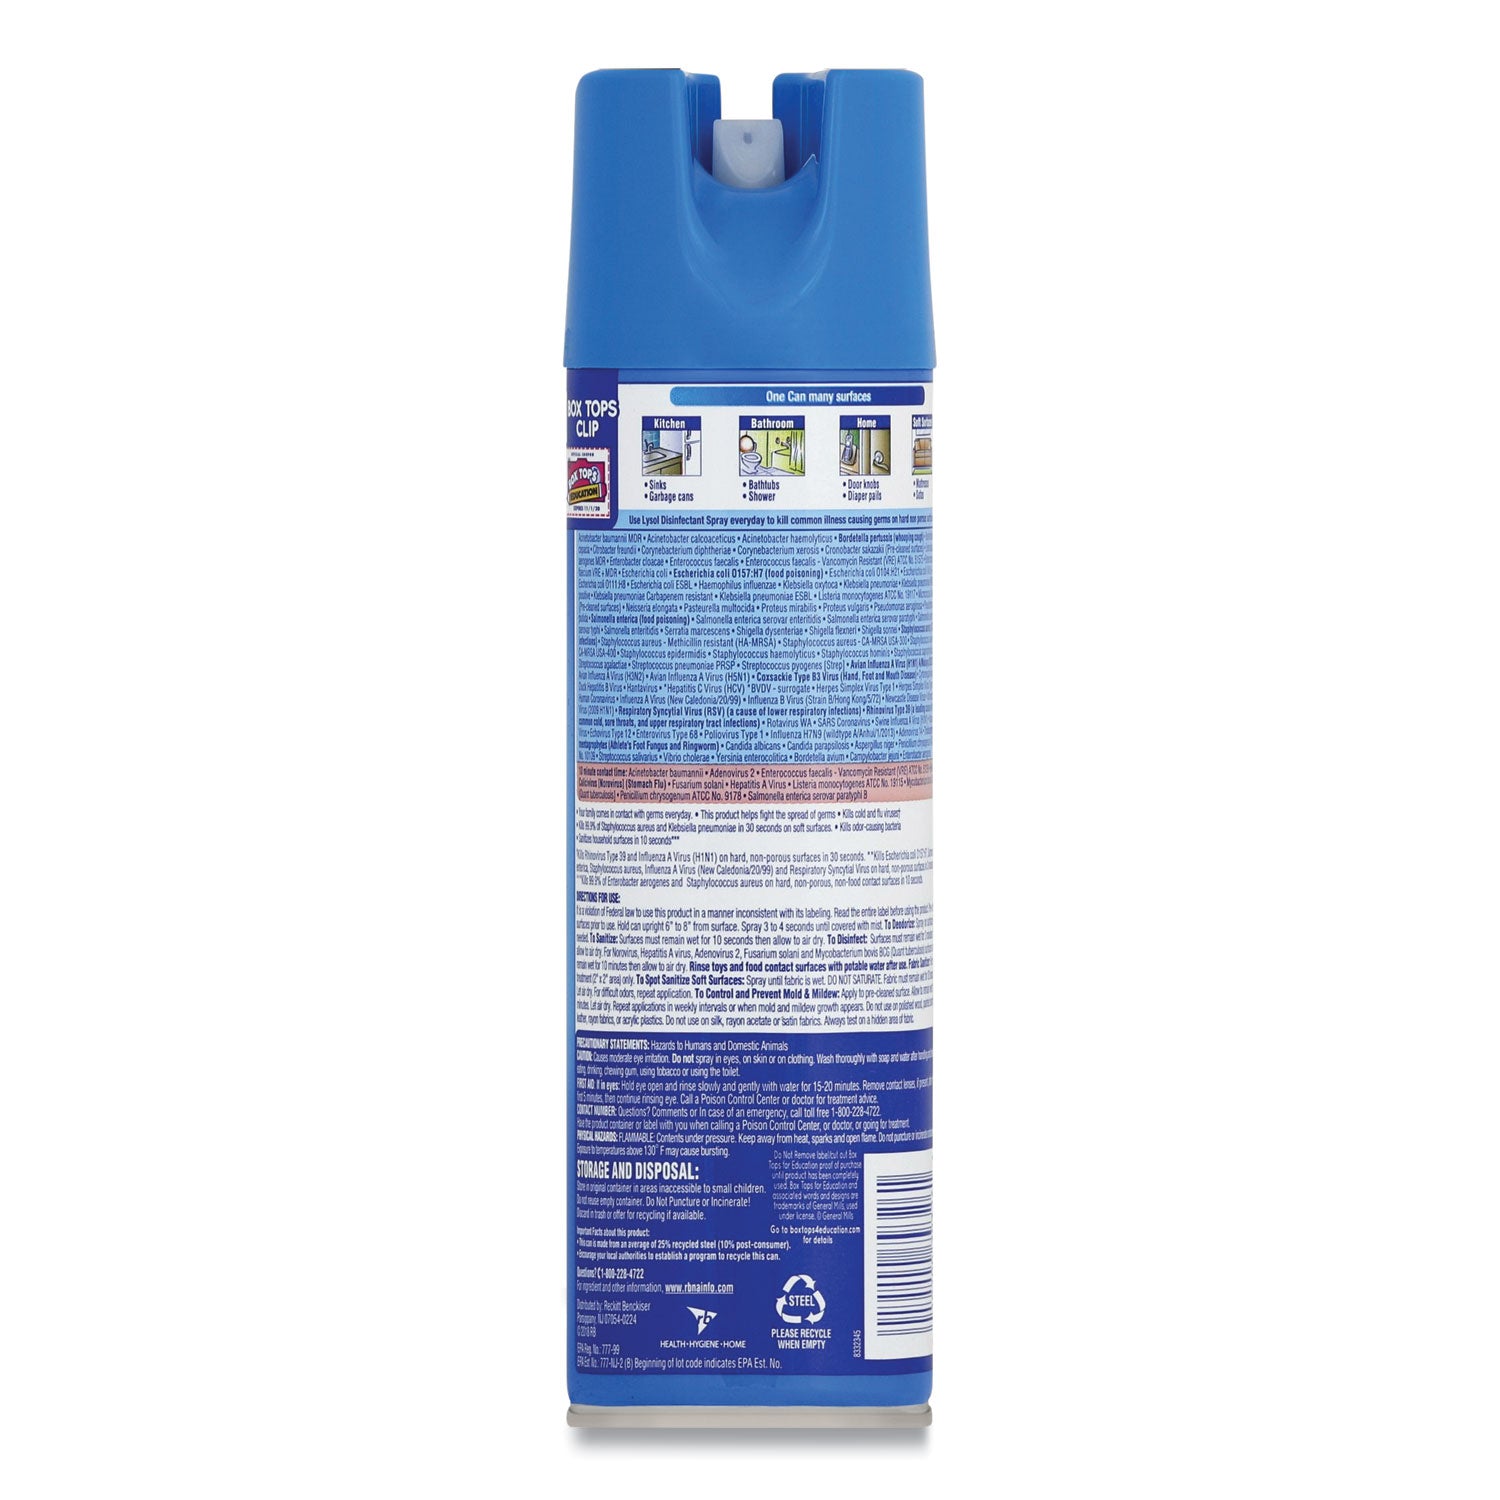 Disinfectant Spray, Spring Waterfall Scent, 19 oz Aerosol Spray - 